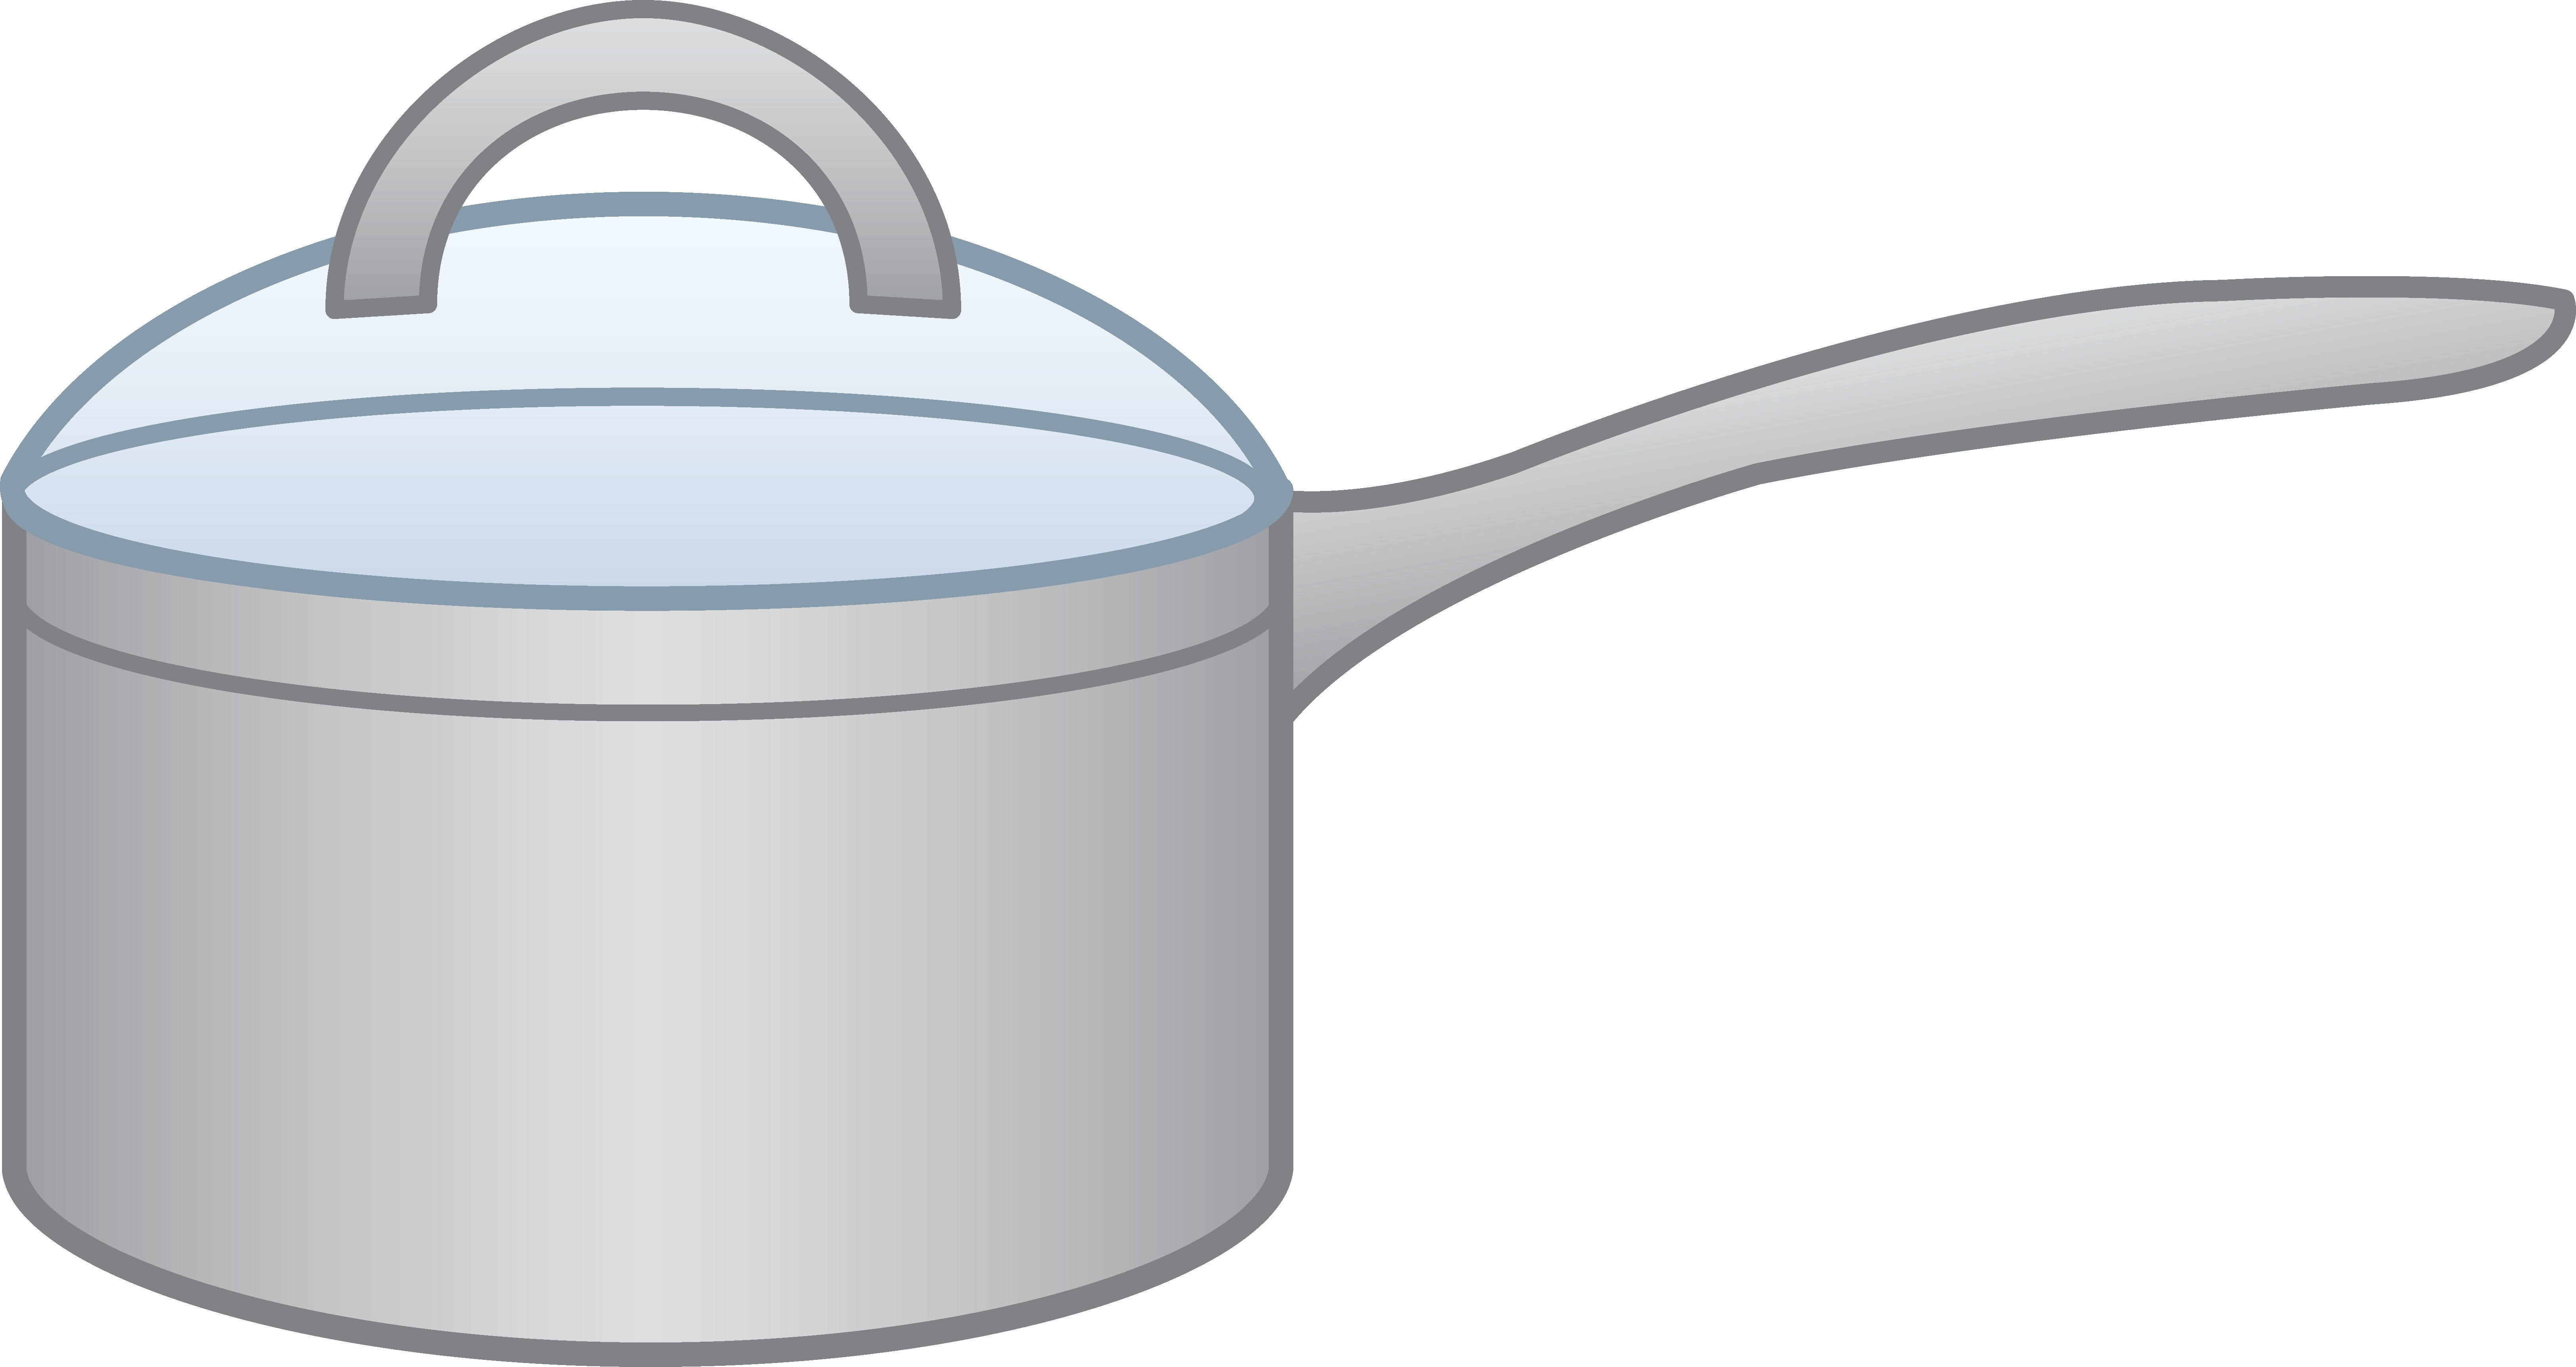 cooking pot clipart - Clip Art Library